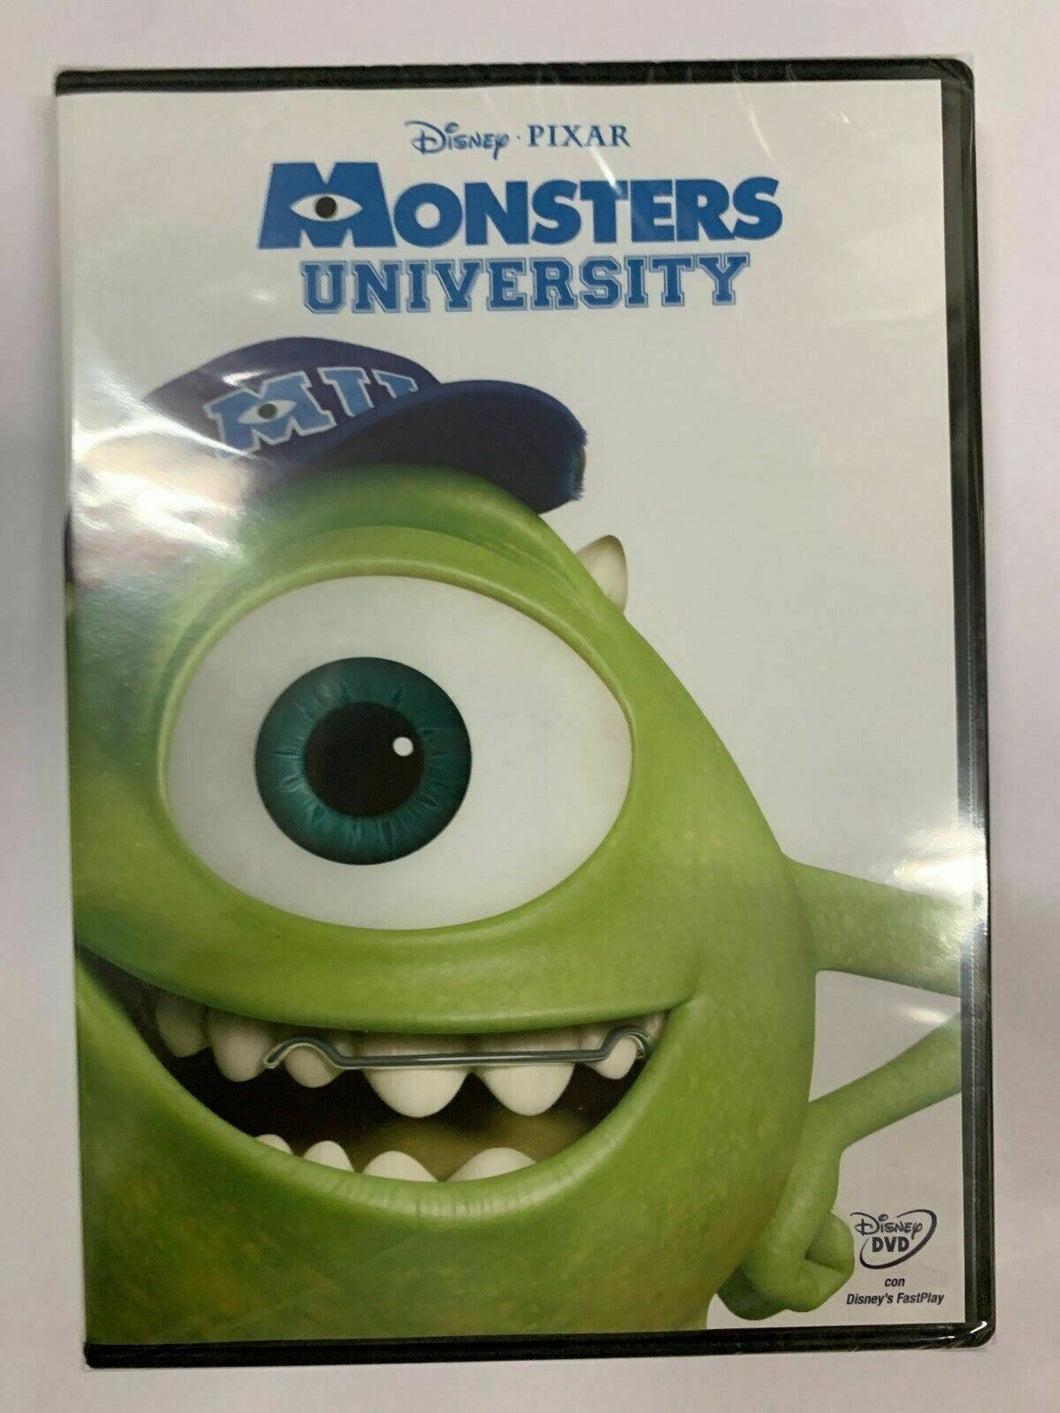 MONSTERS UNIVERSITY DVD Nuovo - Disney Pixar